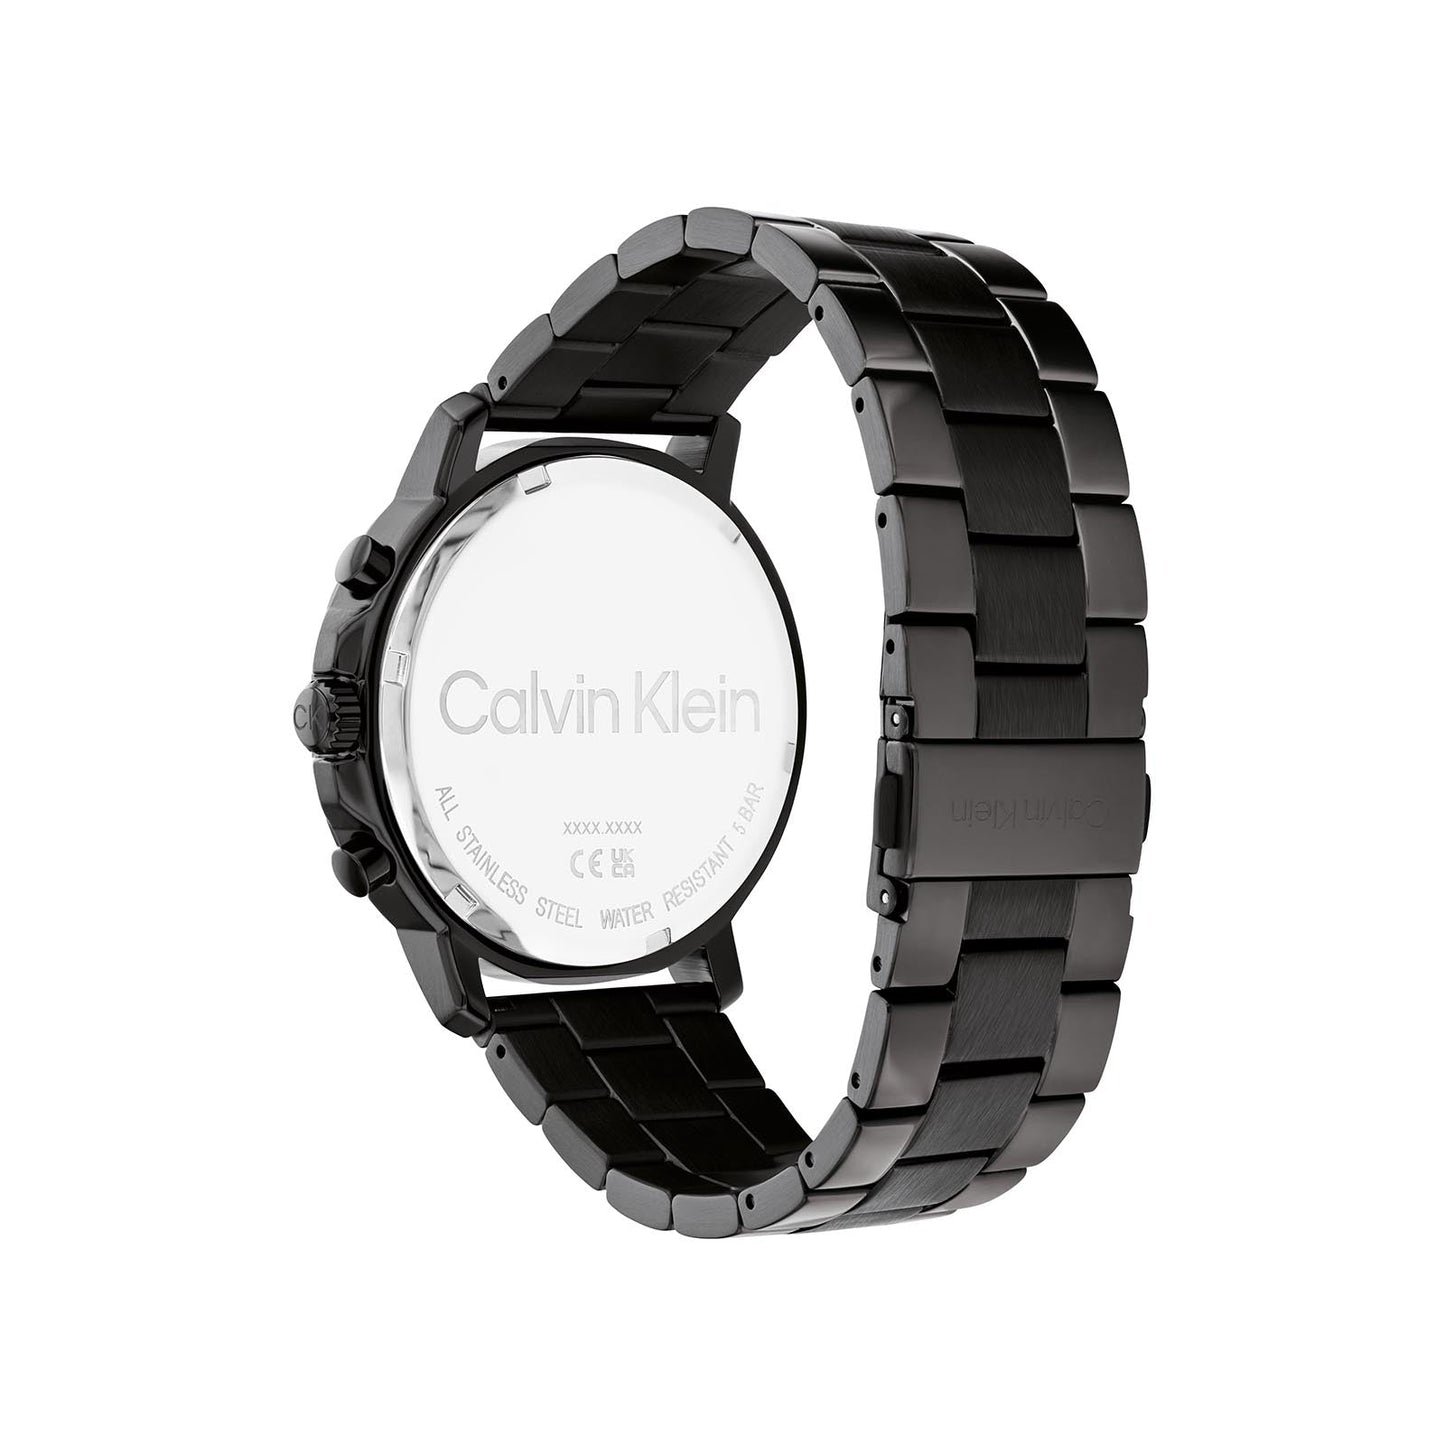 Calvin Klein 25200069 Men's Steel Watch